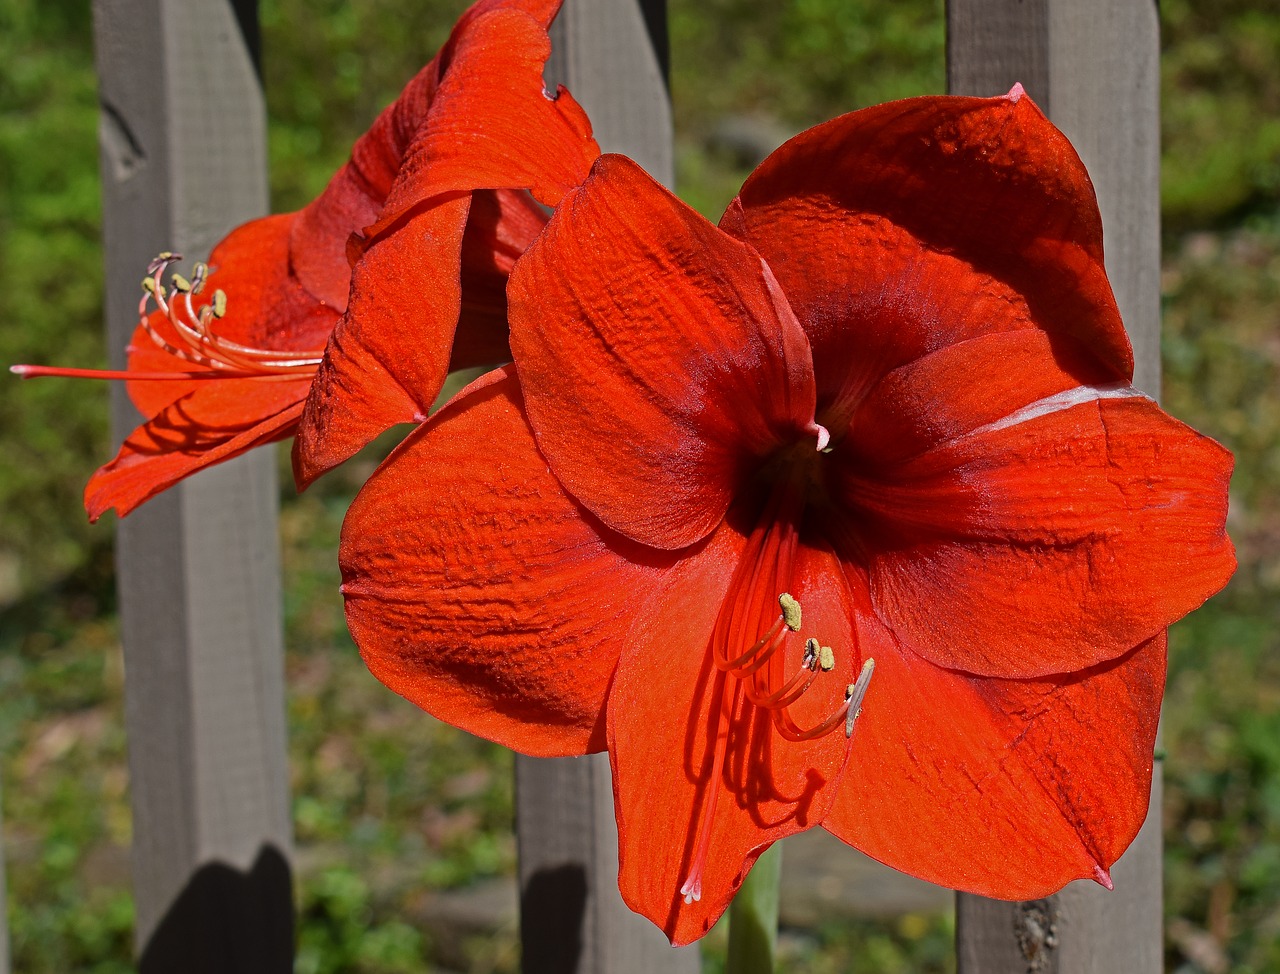 red-hot amaryllis flower blossom free photo